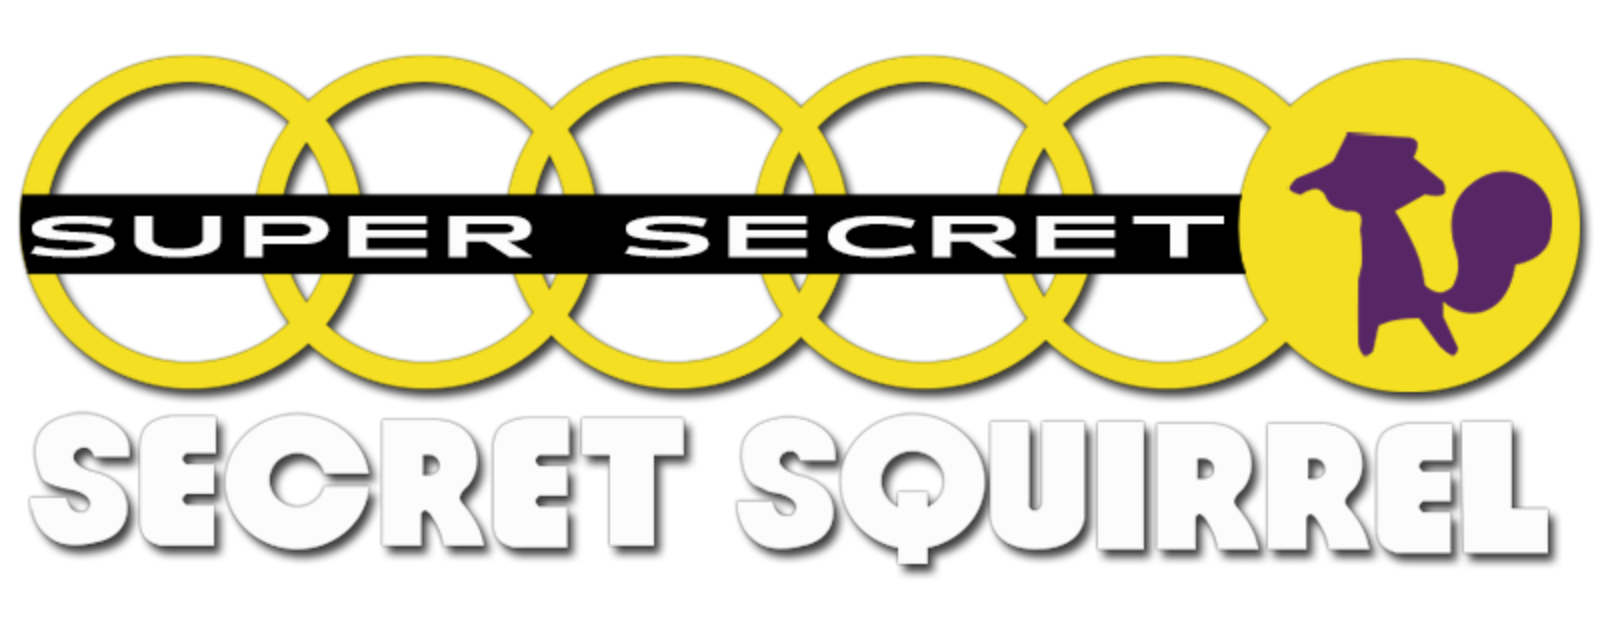 Super Secret Secret Squirrel Complete 